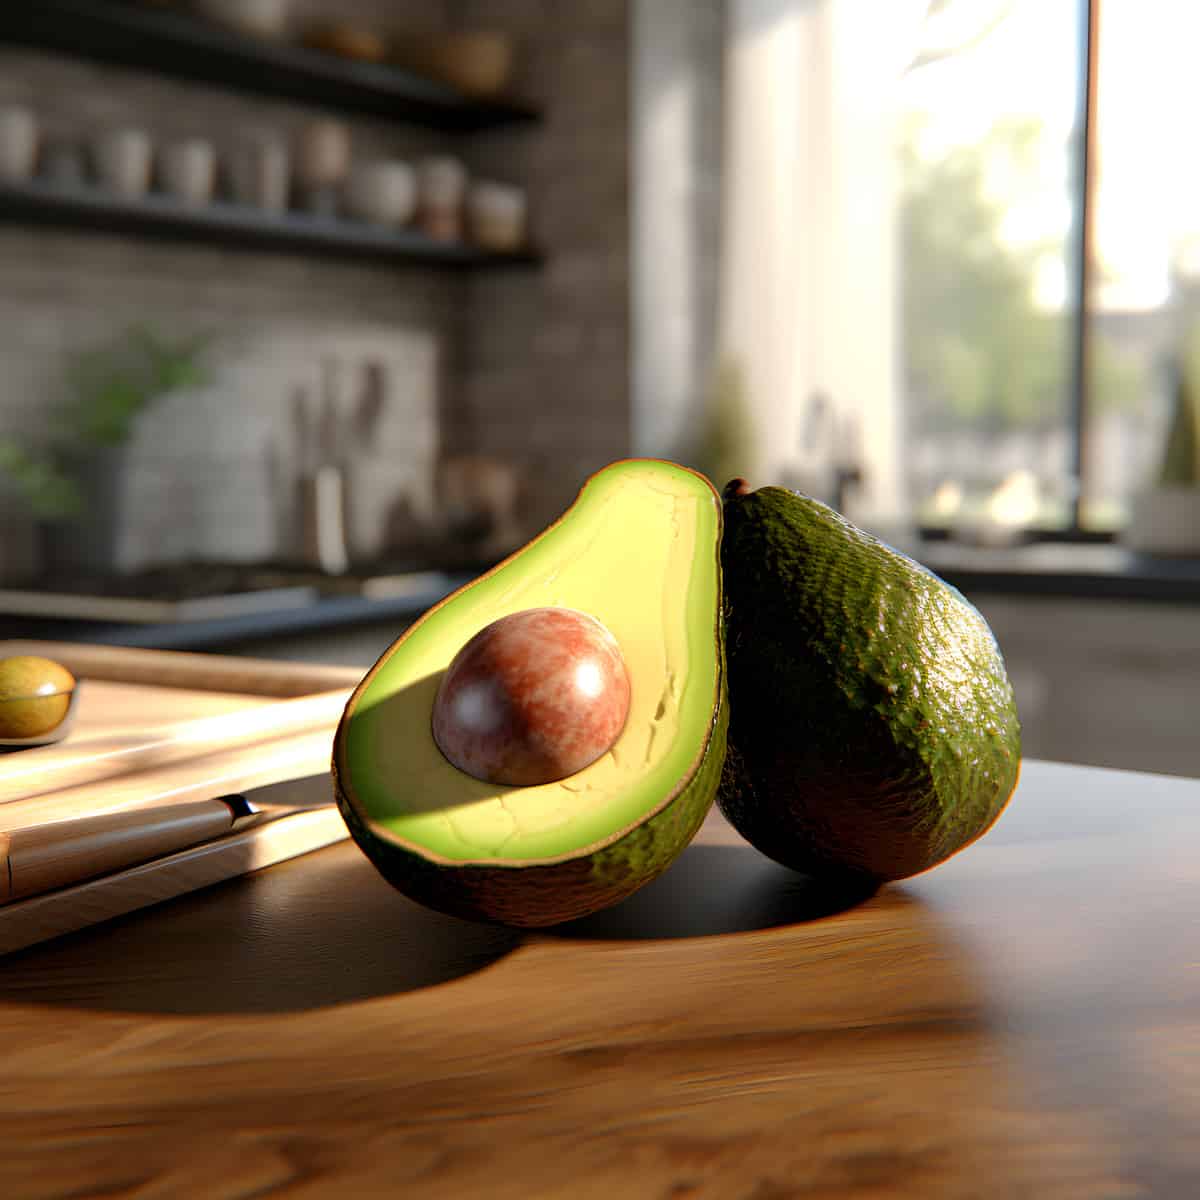 Avocado on a kitchen counter